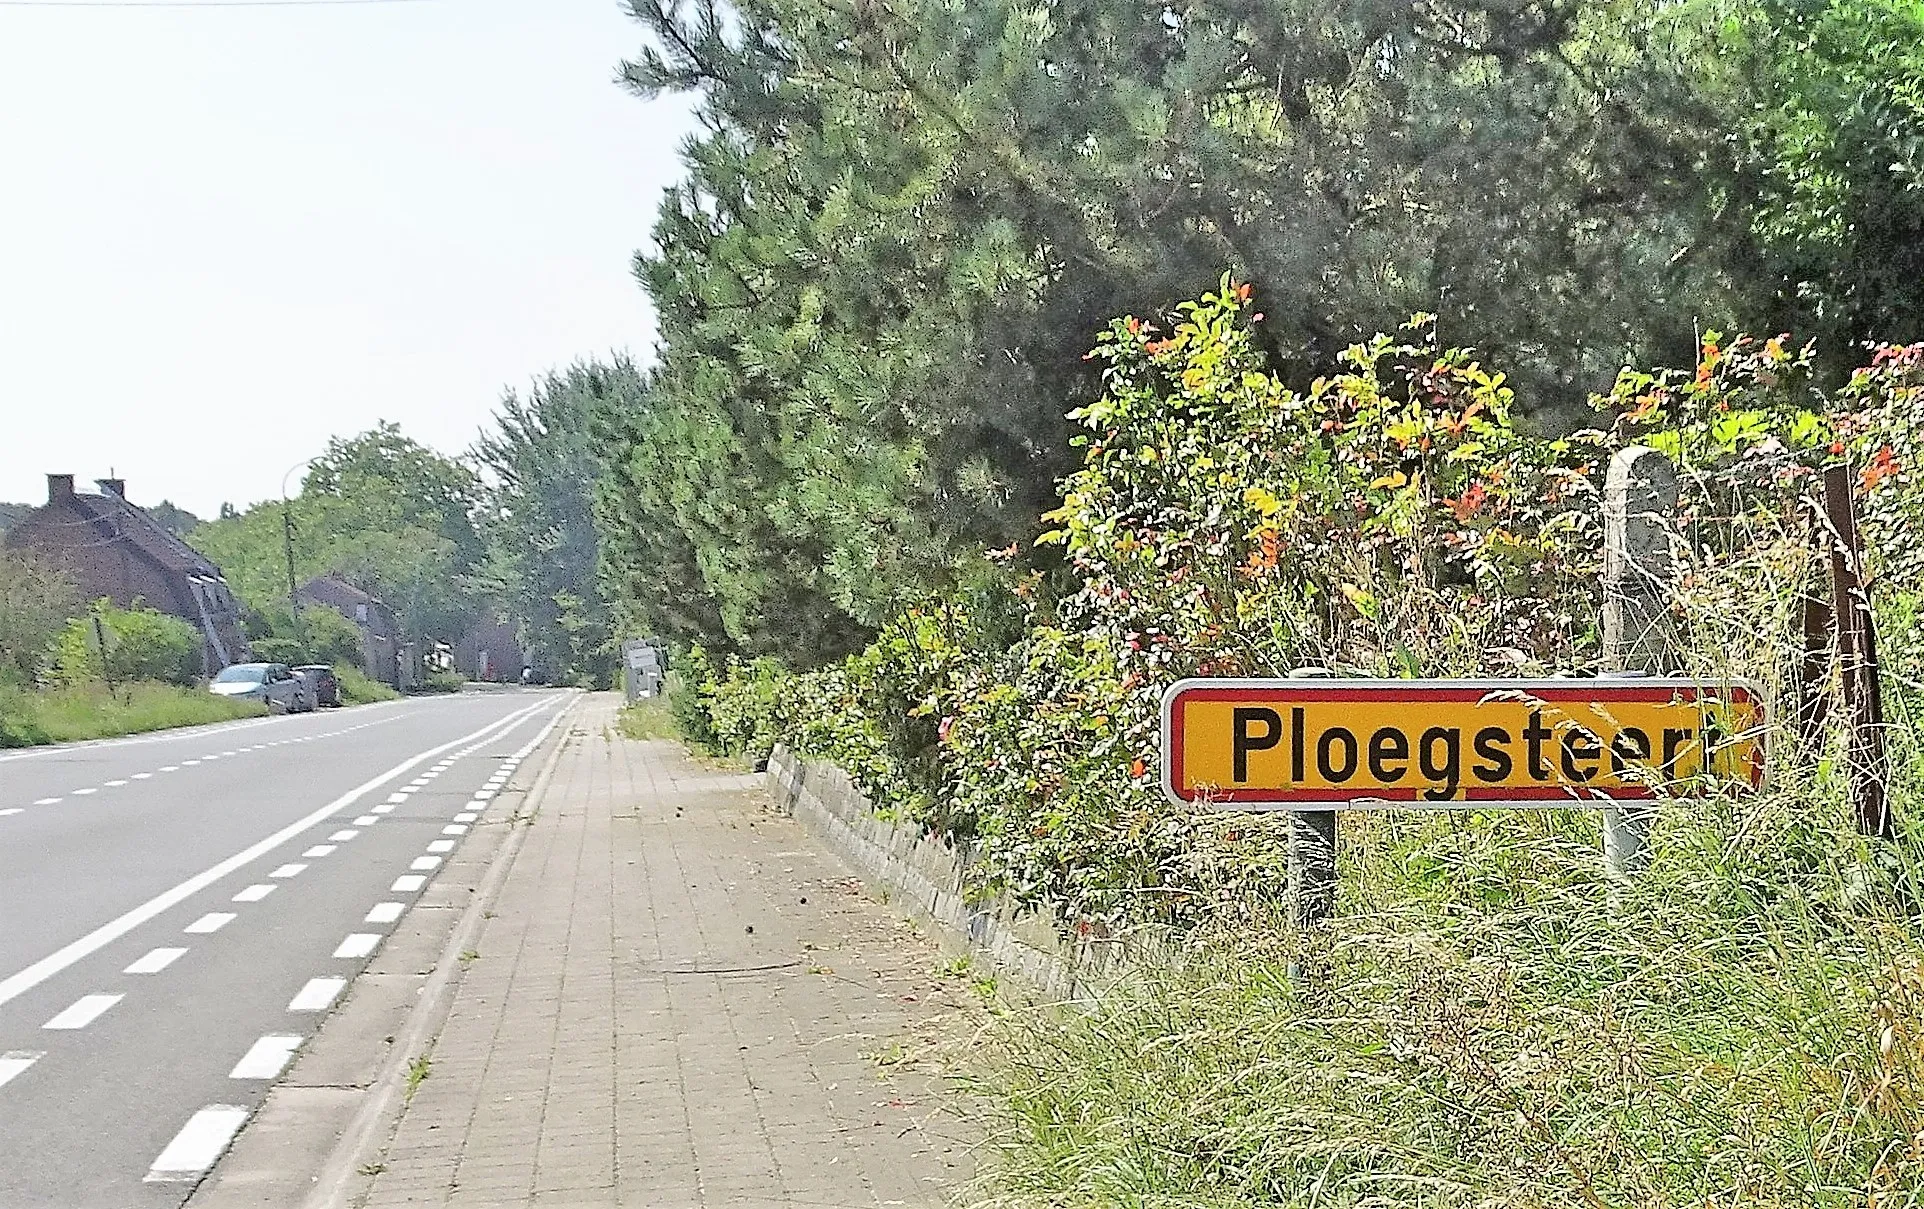 Photo showing: {Ploegsteert, city limit sign